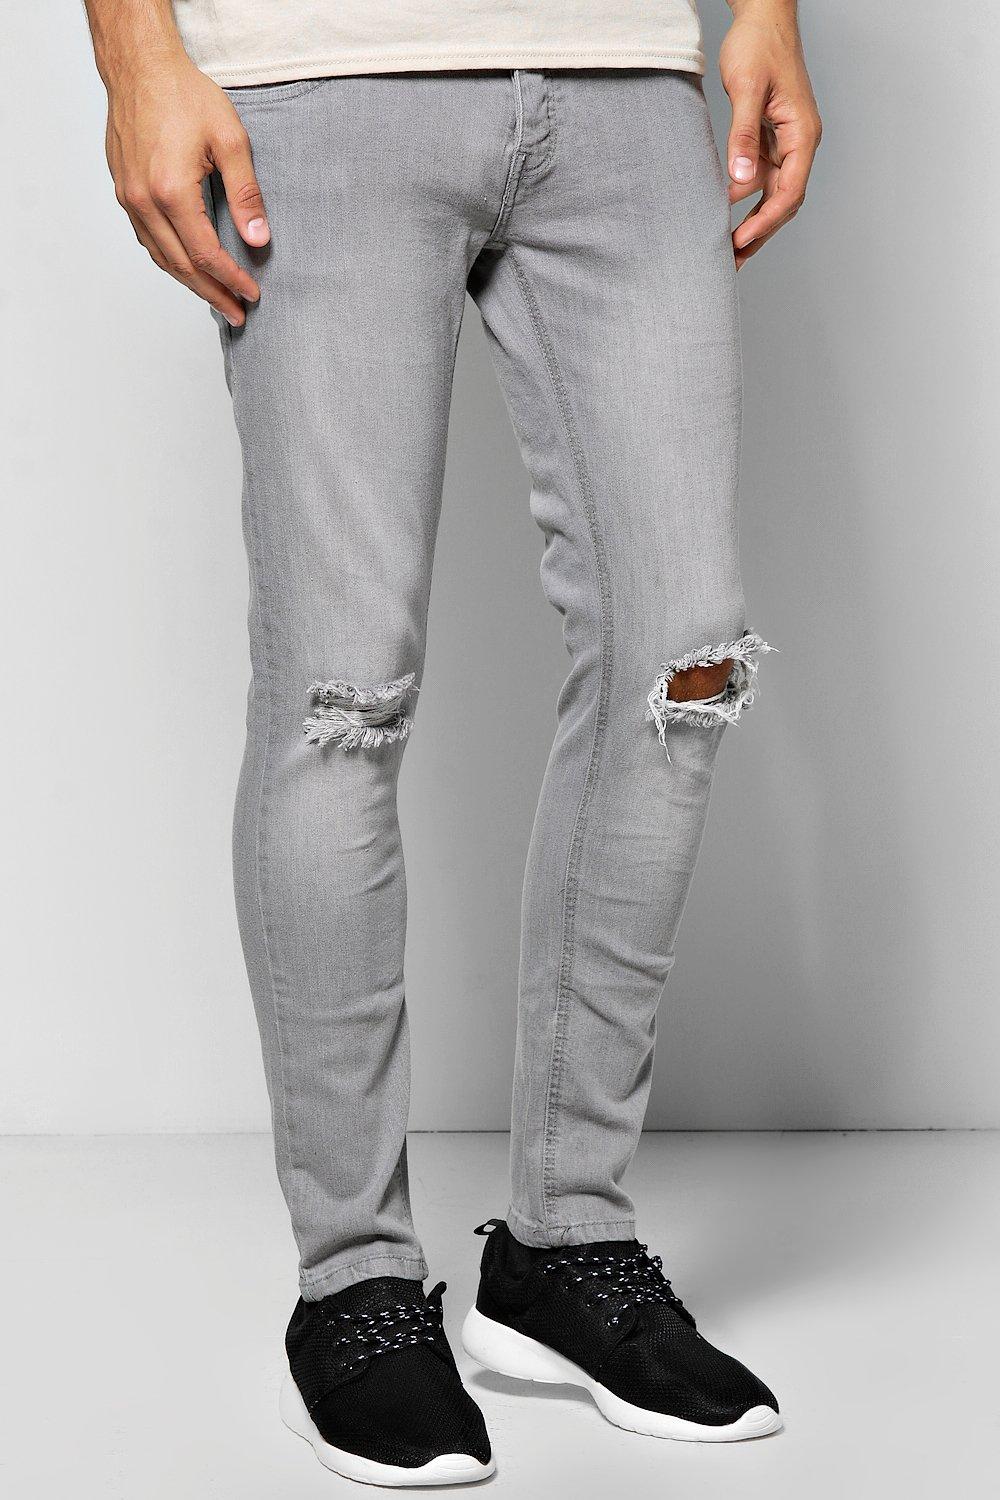 grey jeans australia